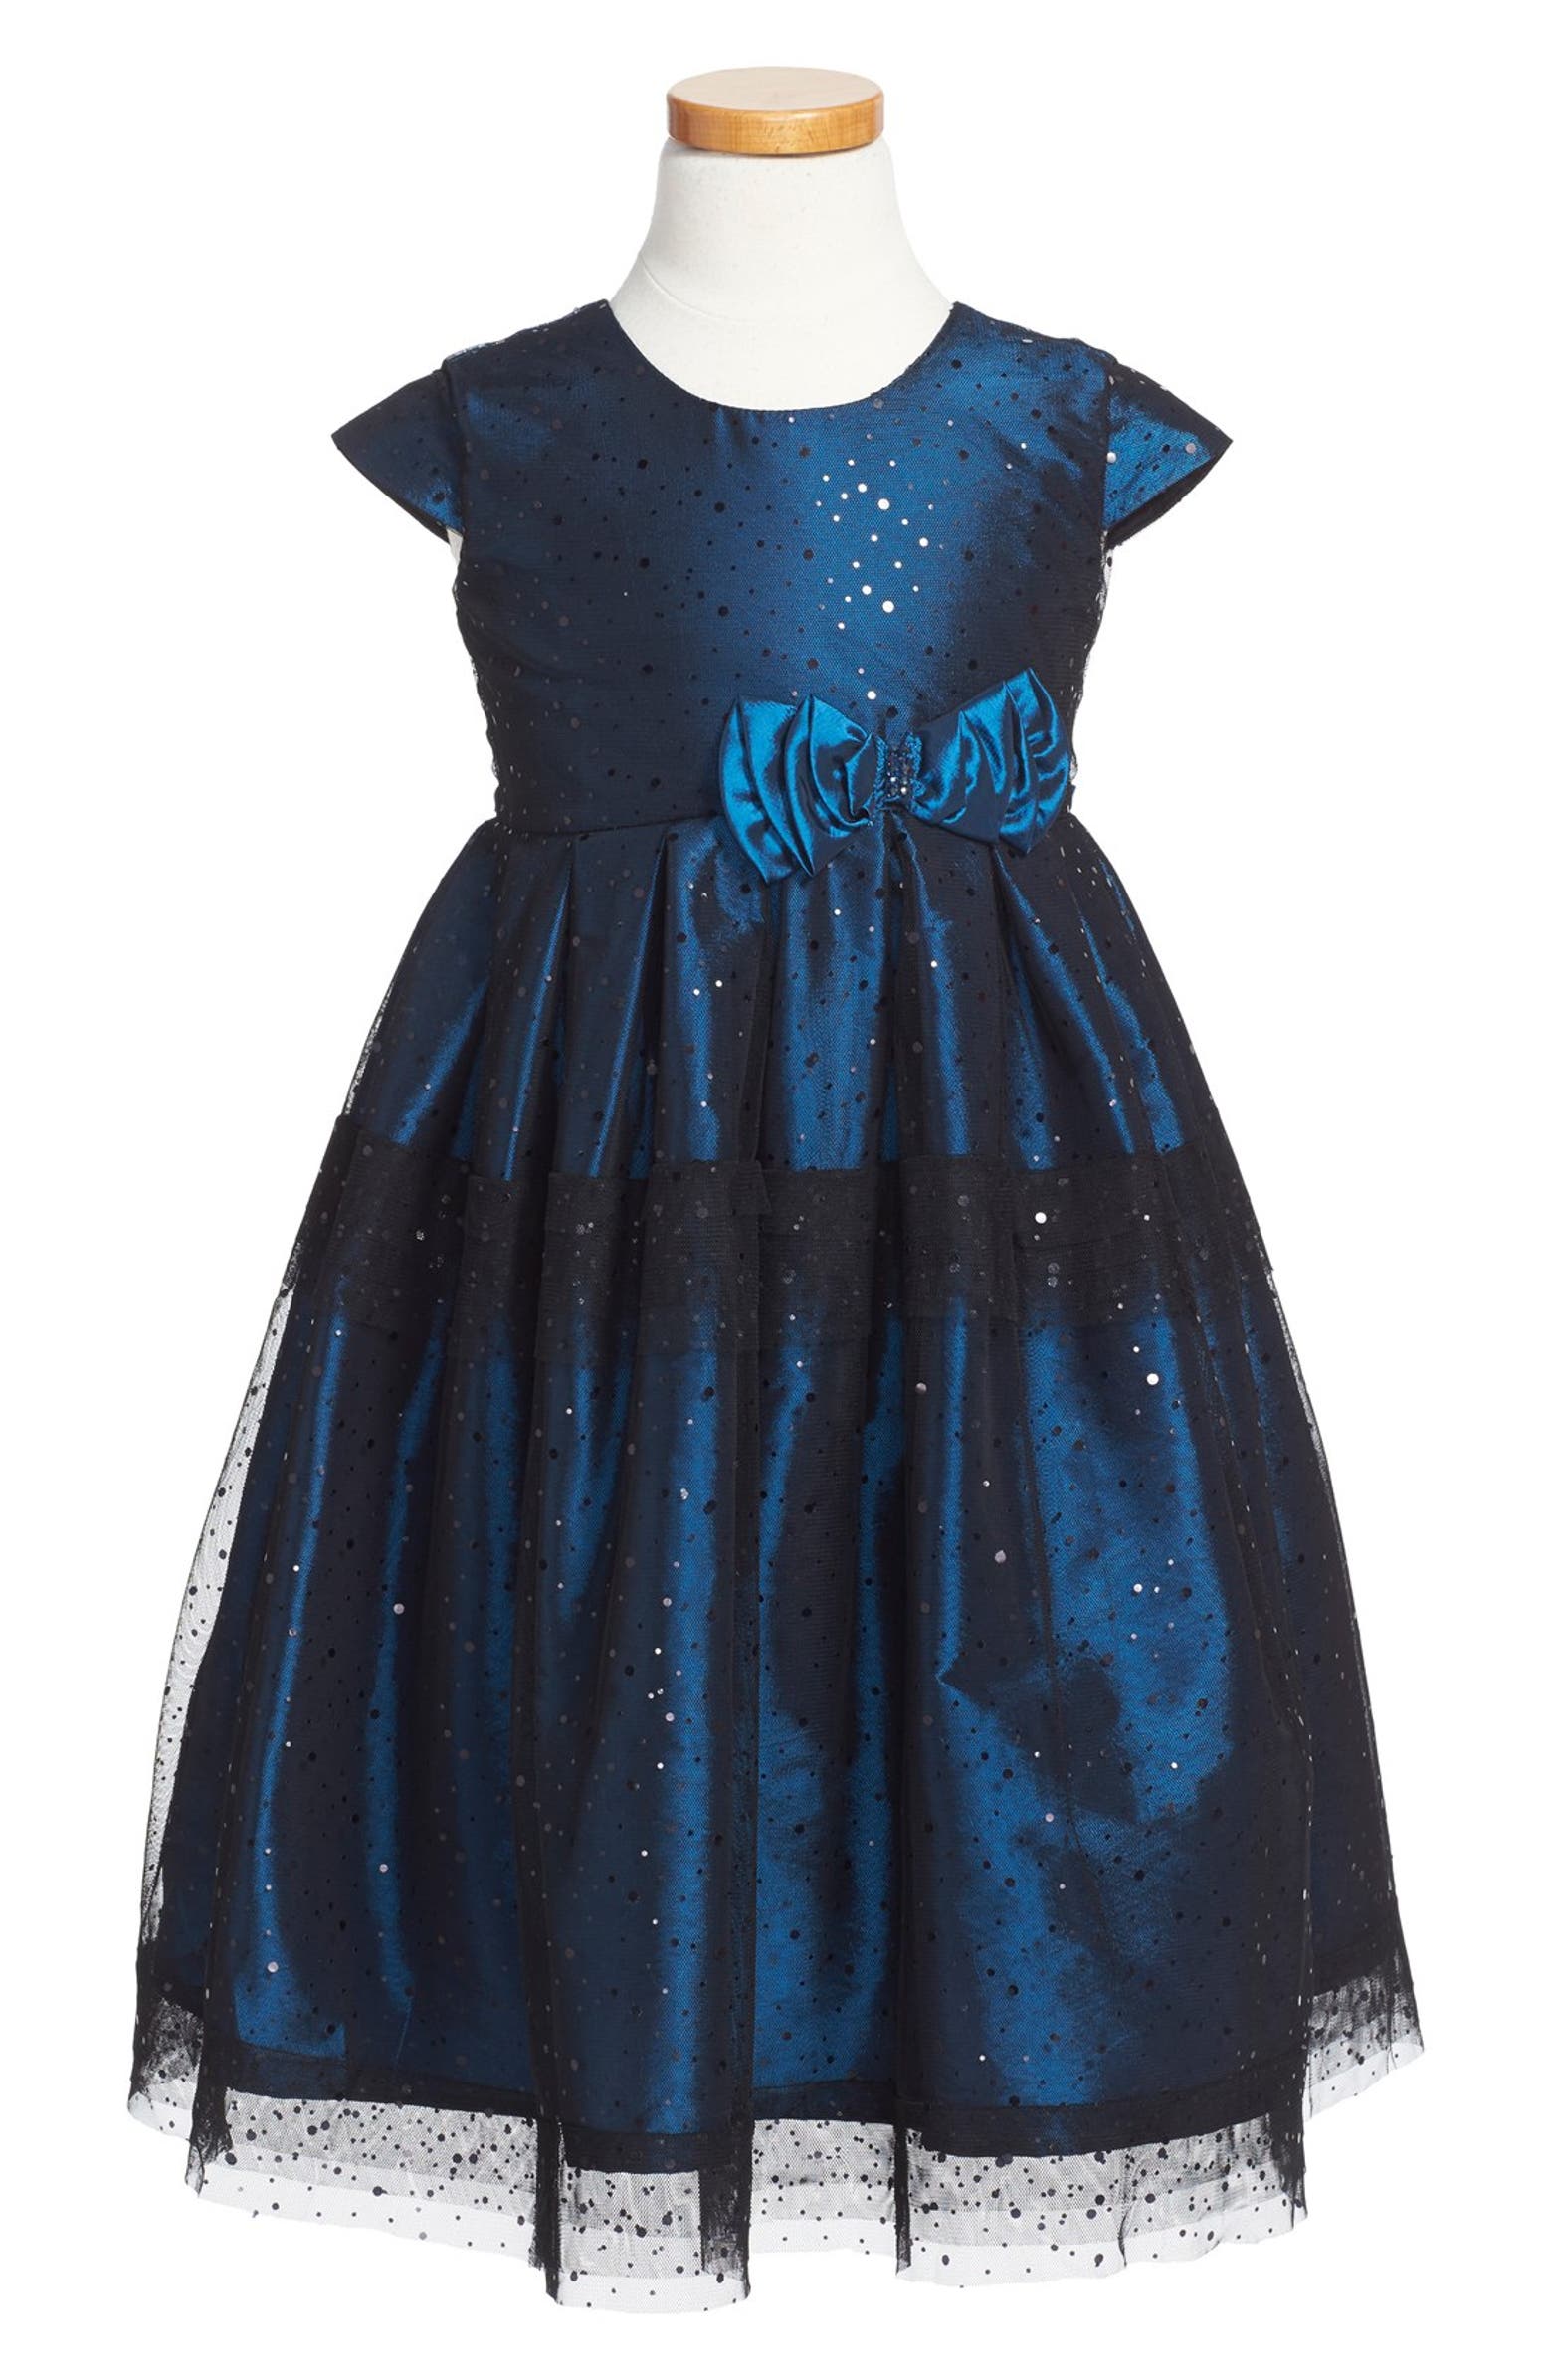 Isobella & Chloe 'Midnight Star' Empire Waist Party Dress (Toddler ...